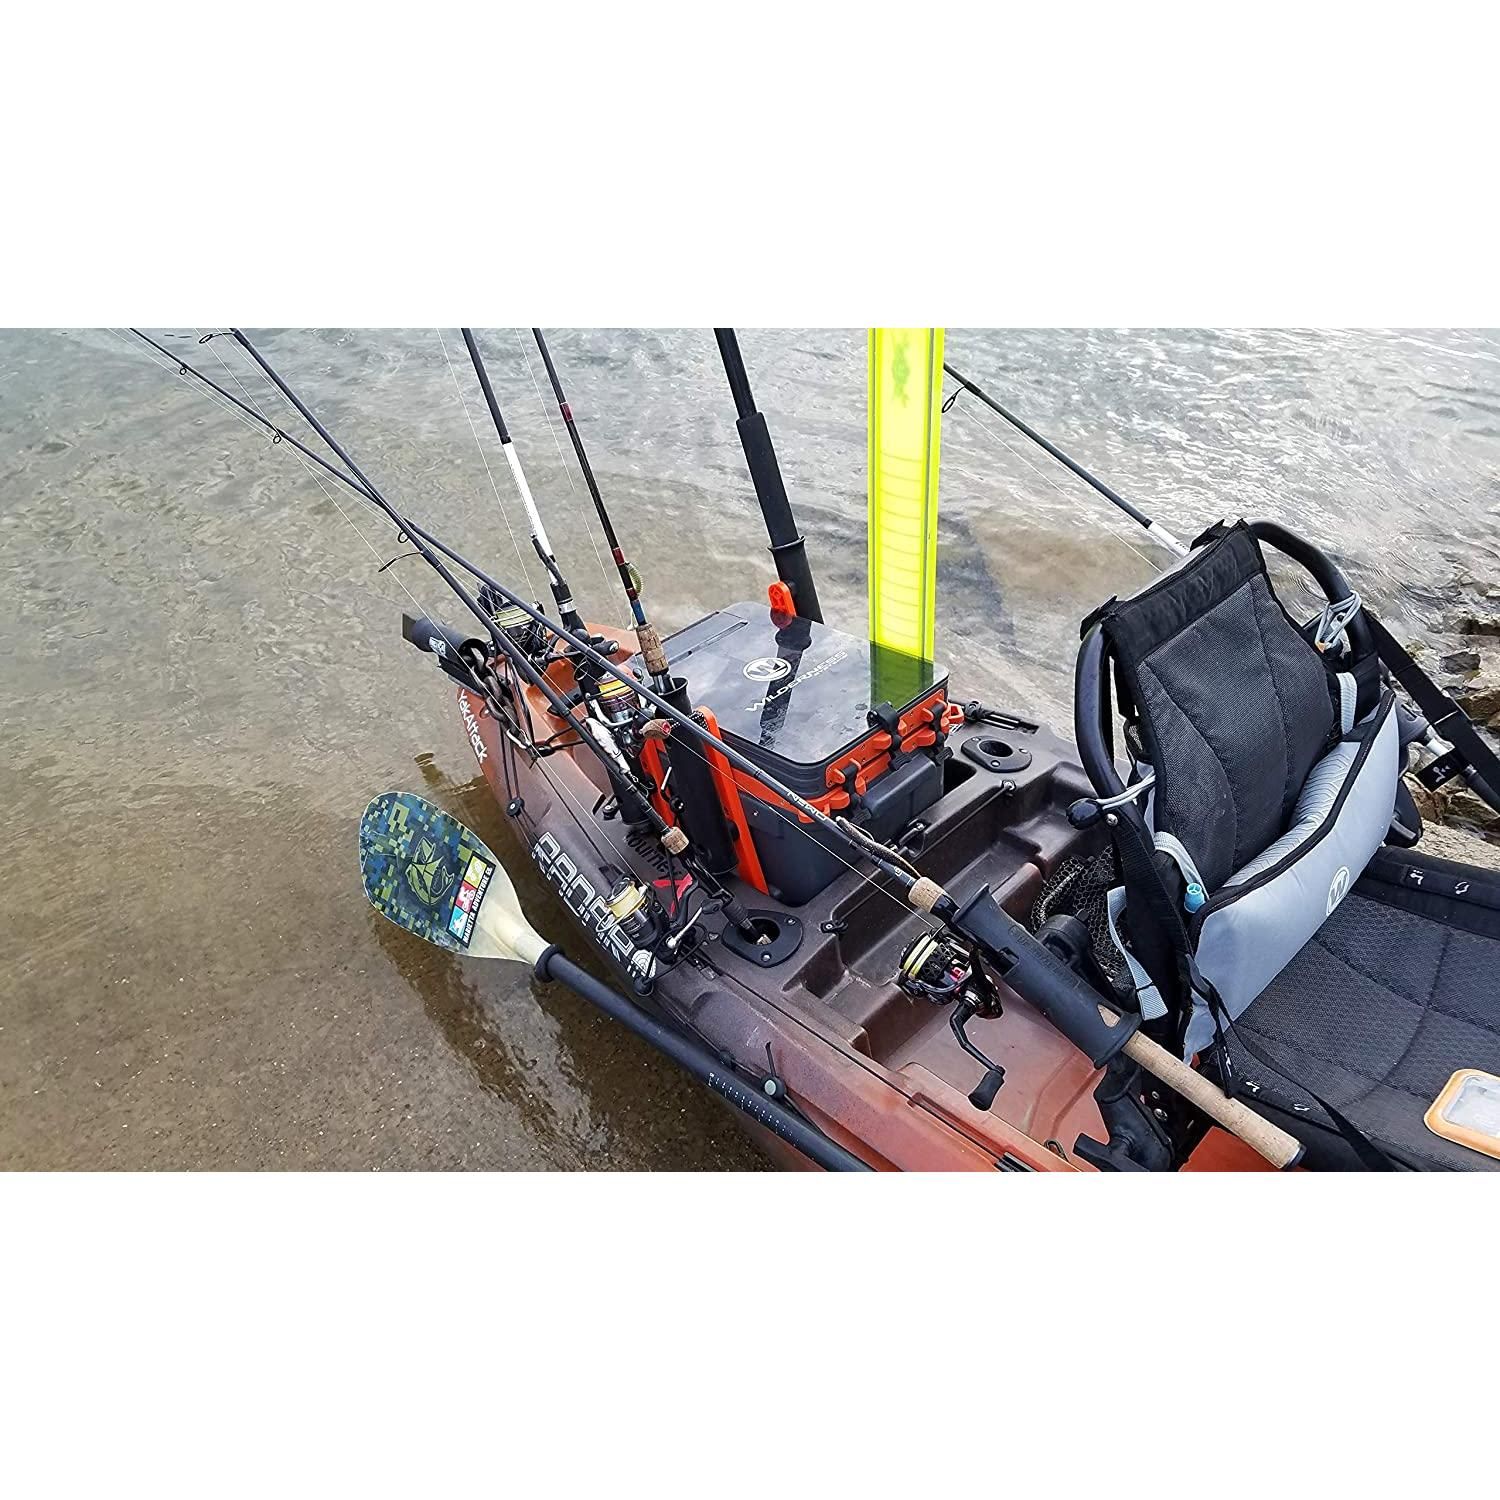 Wilderness Systems Kayak Crate, 4 Rod Holders, Kayak Tackle Storage